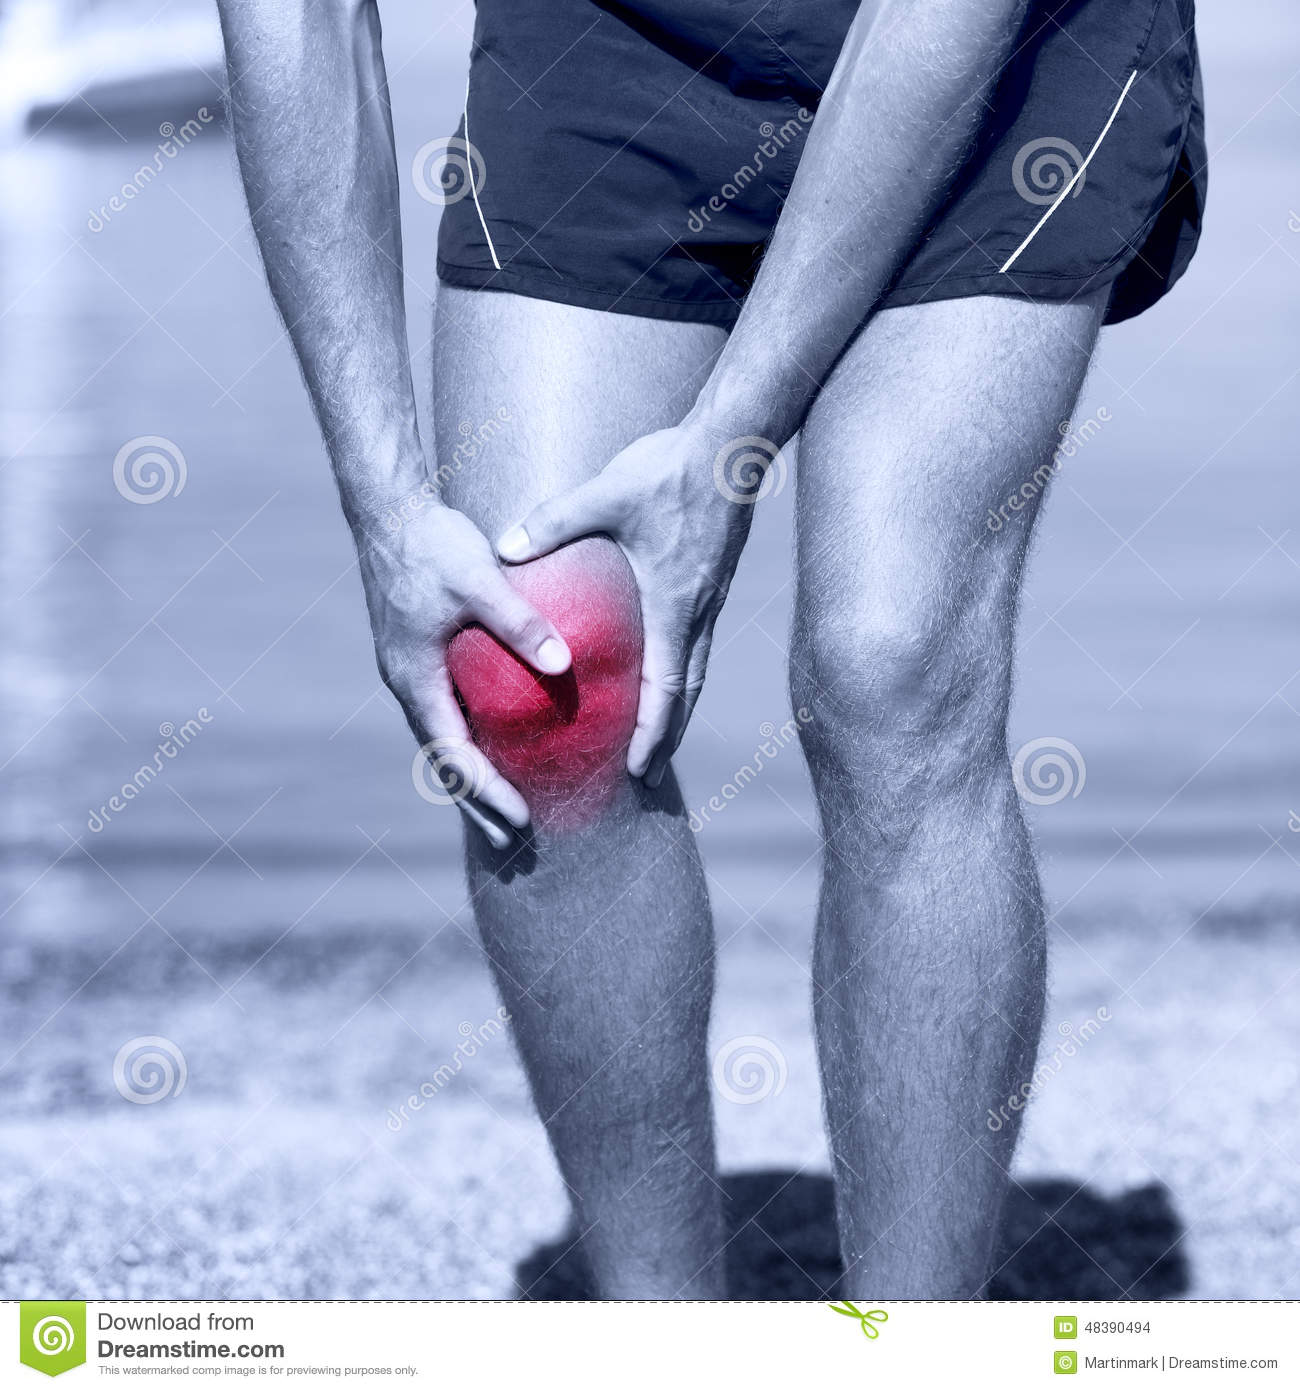 Knee Injury   Sports Running Knee Injuries On Man Stock Photo   Image